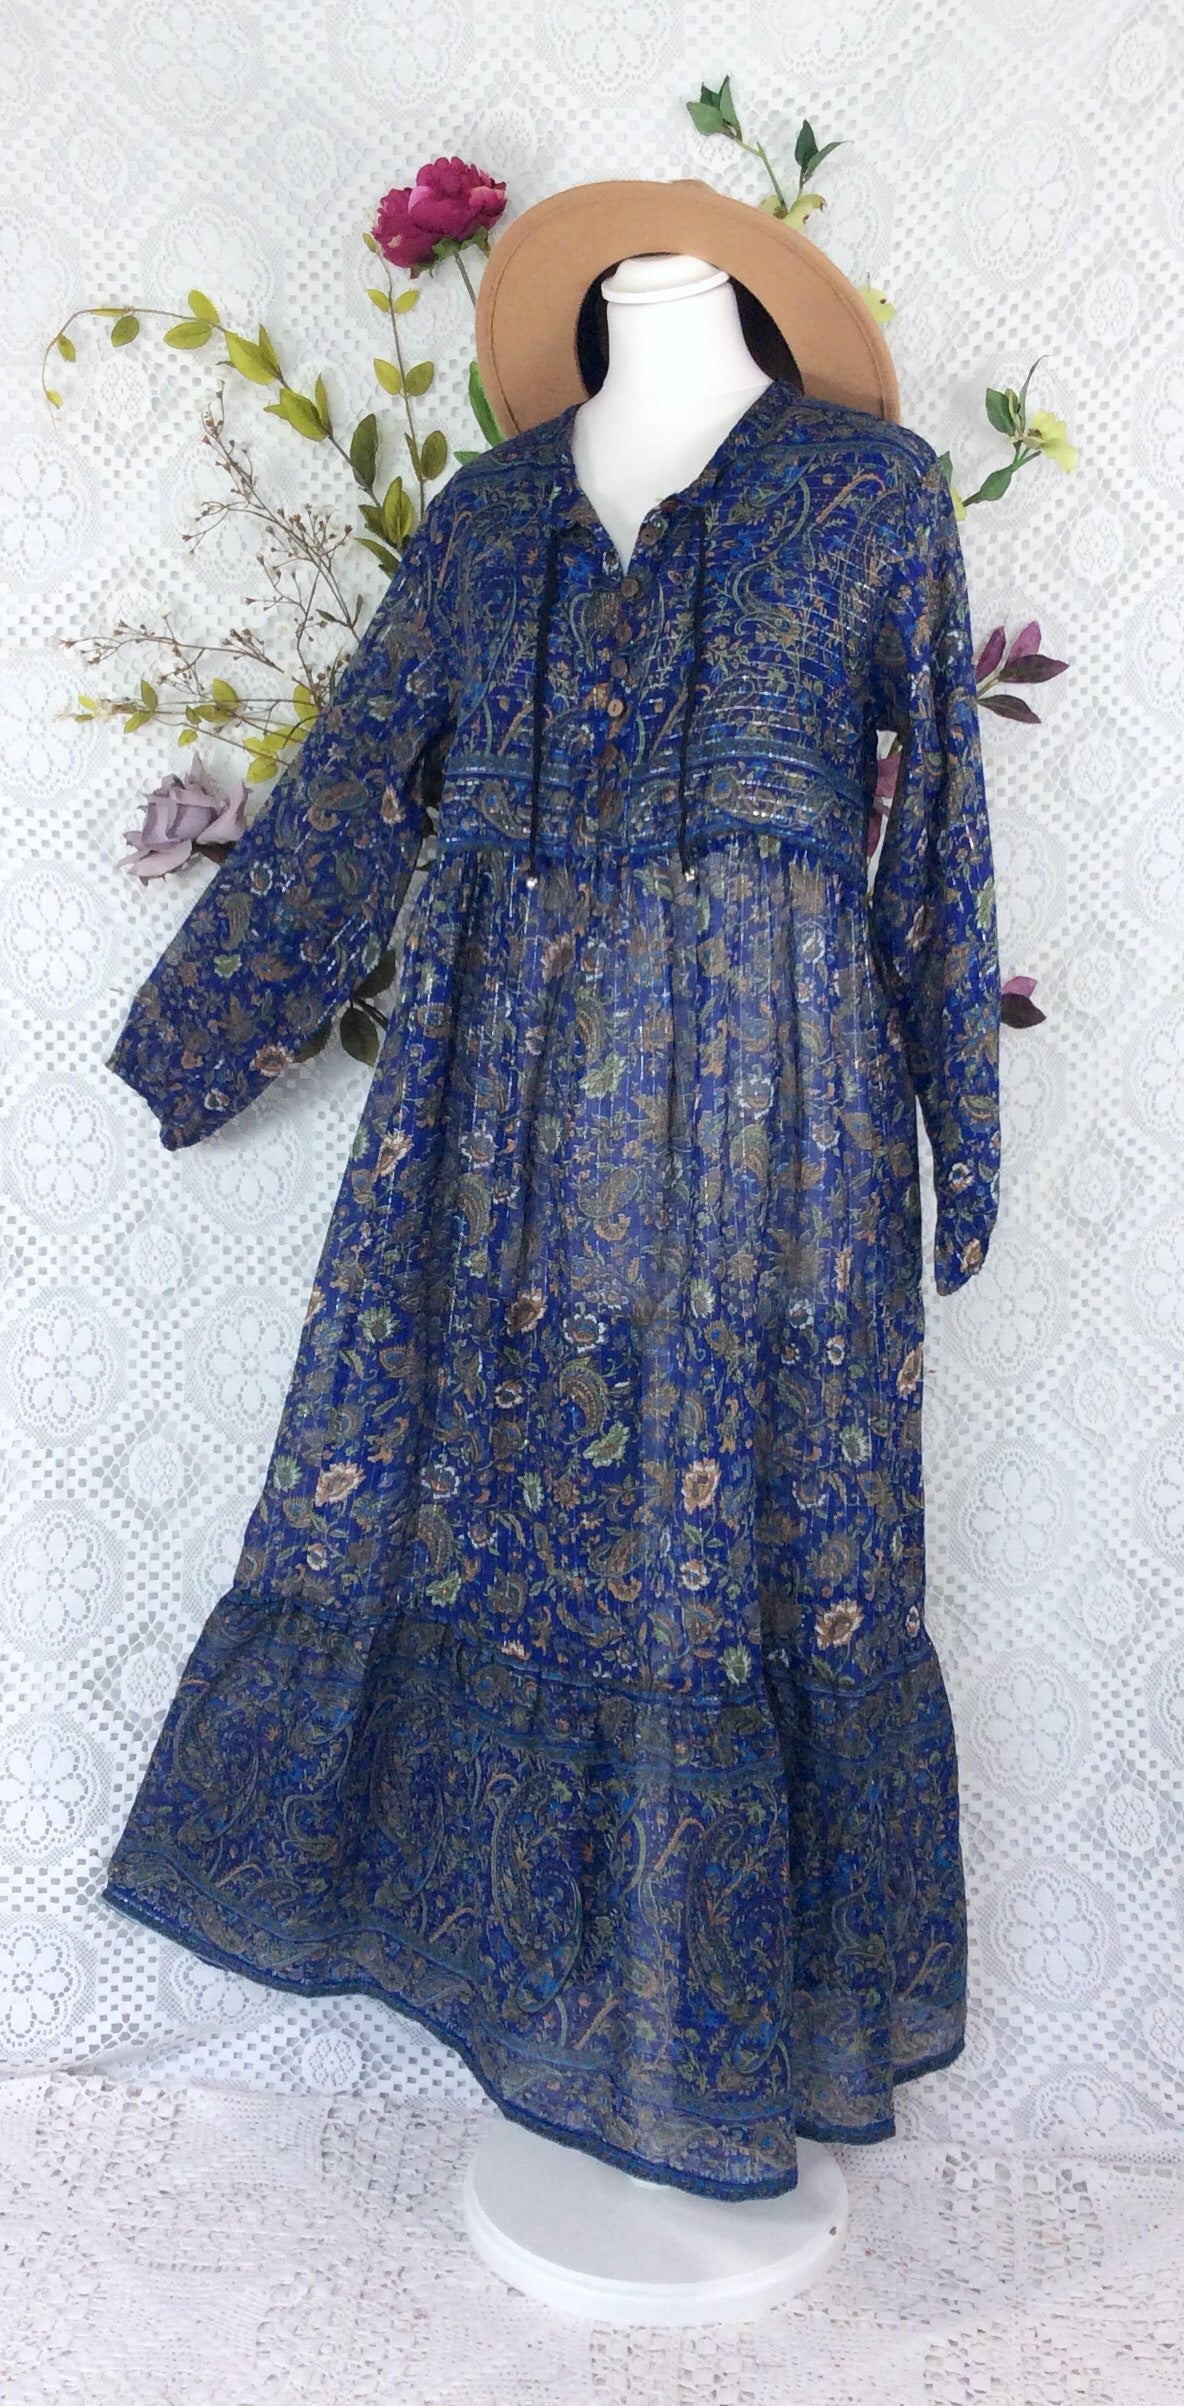 SALE Florence Dress - Sparkly Indian Cotton Smock Dress - Midnight Blu ...